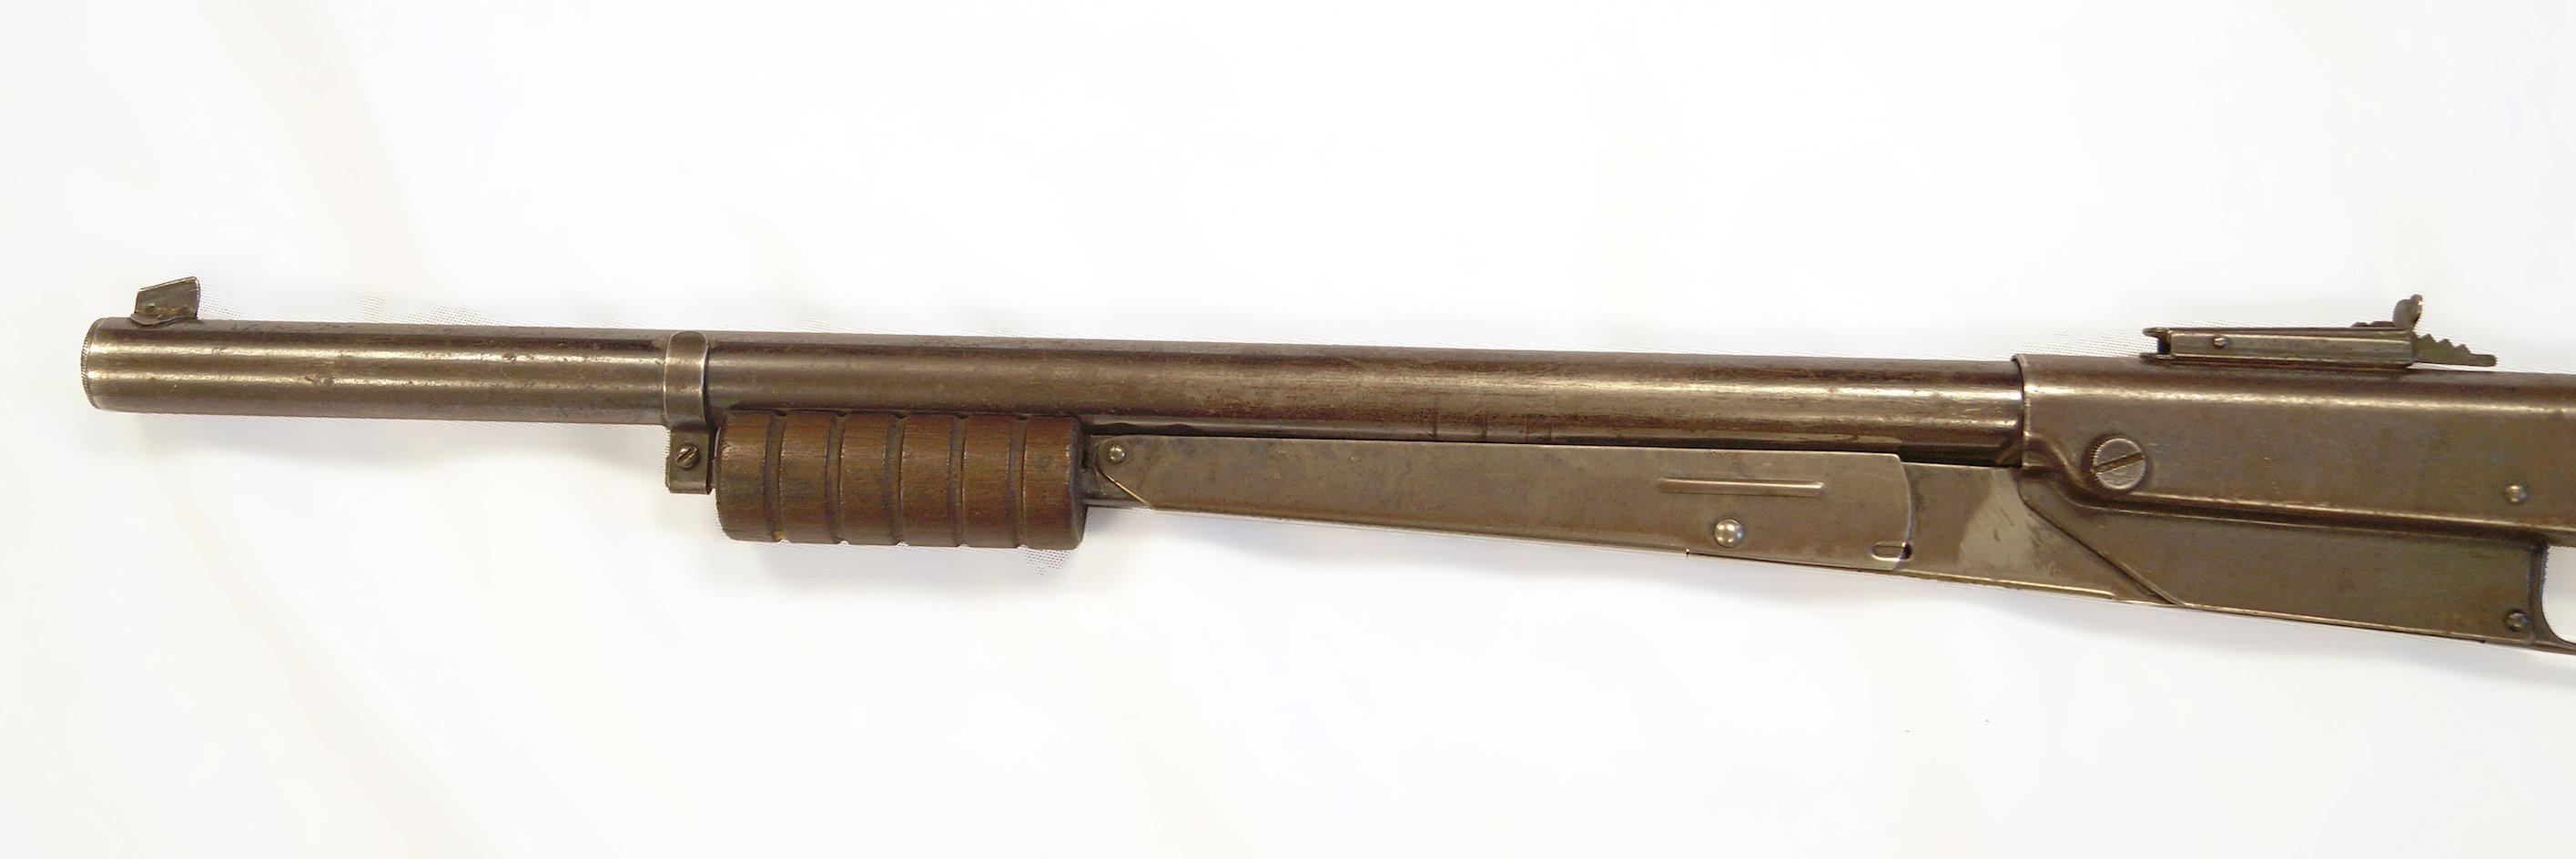 Daisy pump actionn BB Rifle with 4 tubes of Bbs.